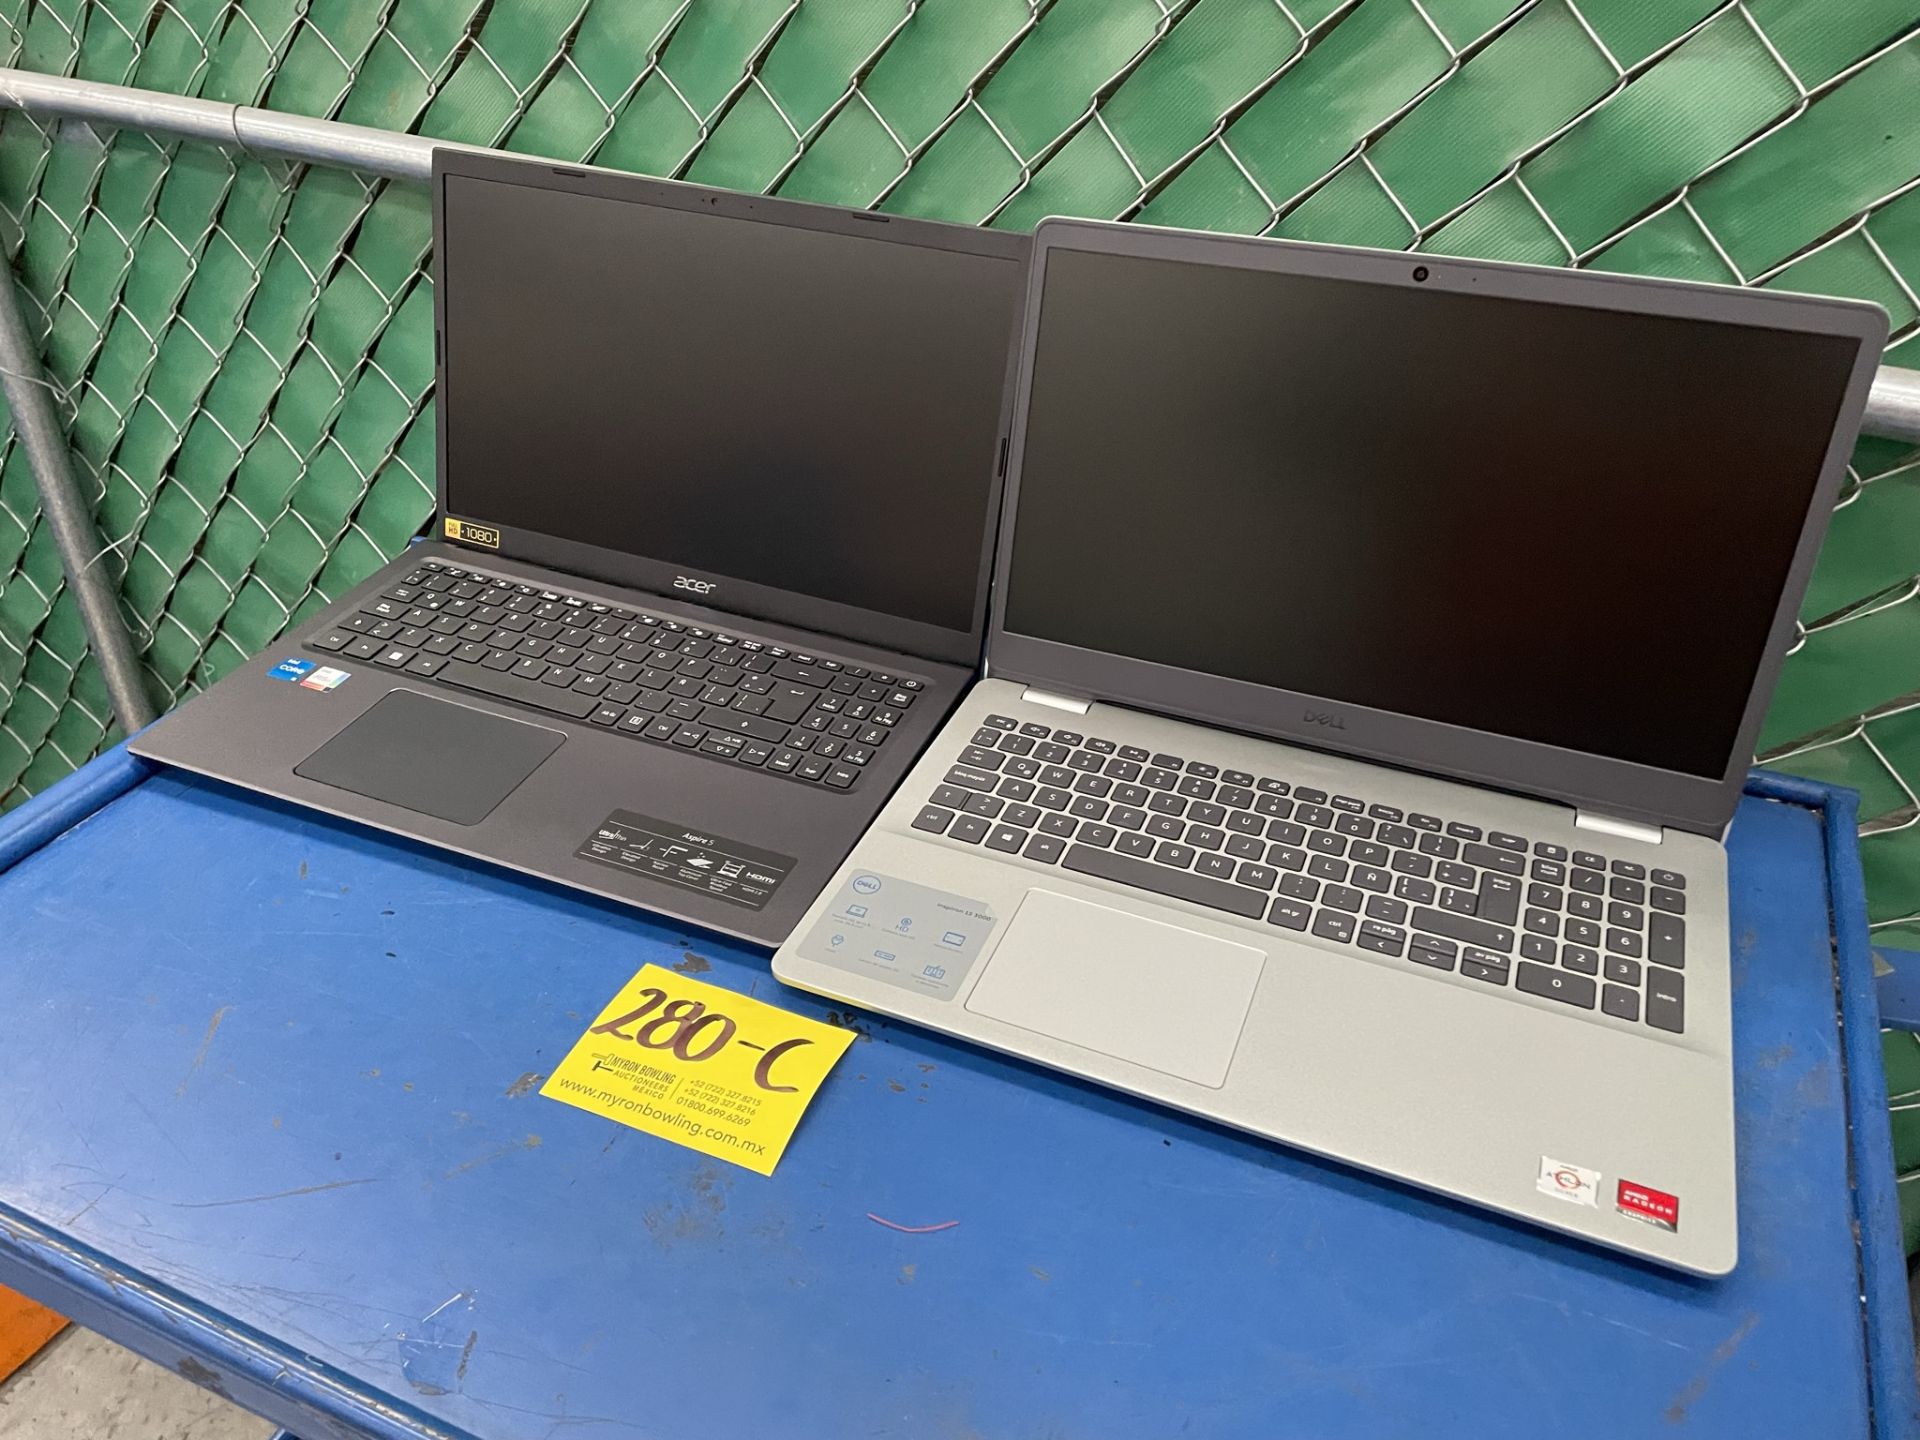 (EQUIPO NUEVO) Lote De 2 Laptops Contiene: 1 Laptop Marca DELL, Modelo I3505, Serie N/D, SO WINDOWS - Image 6 of 9